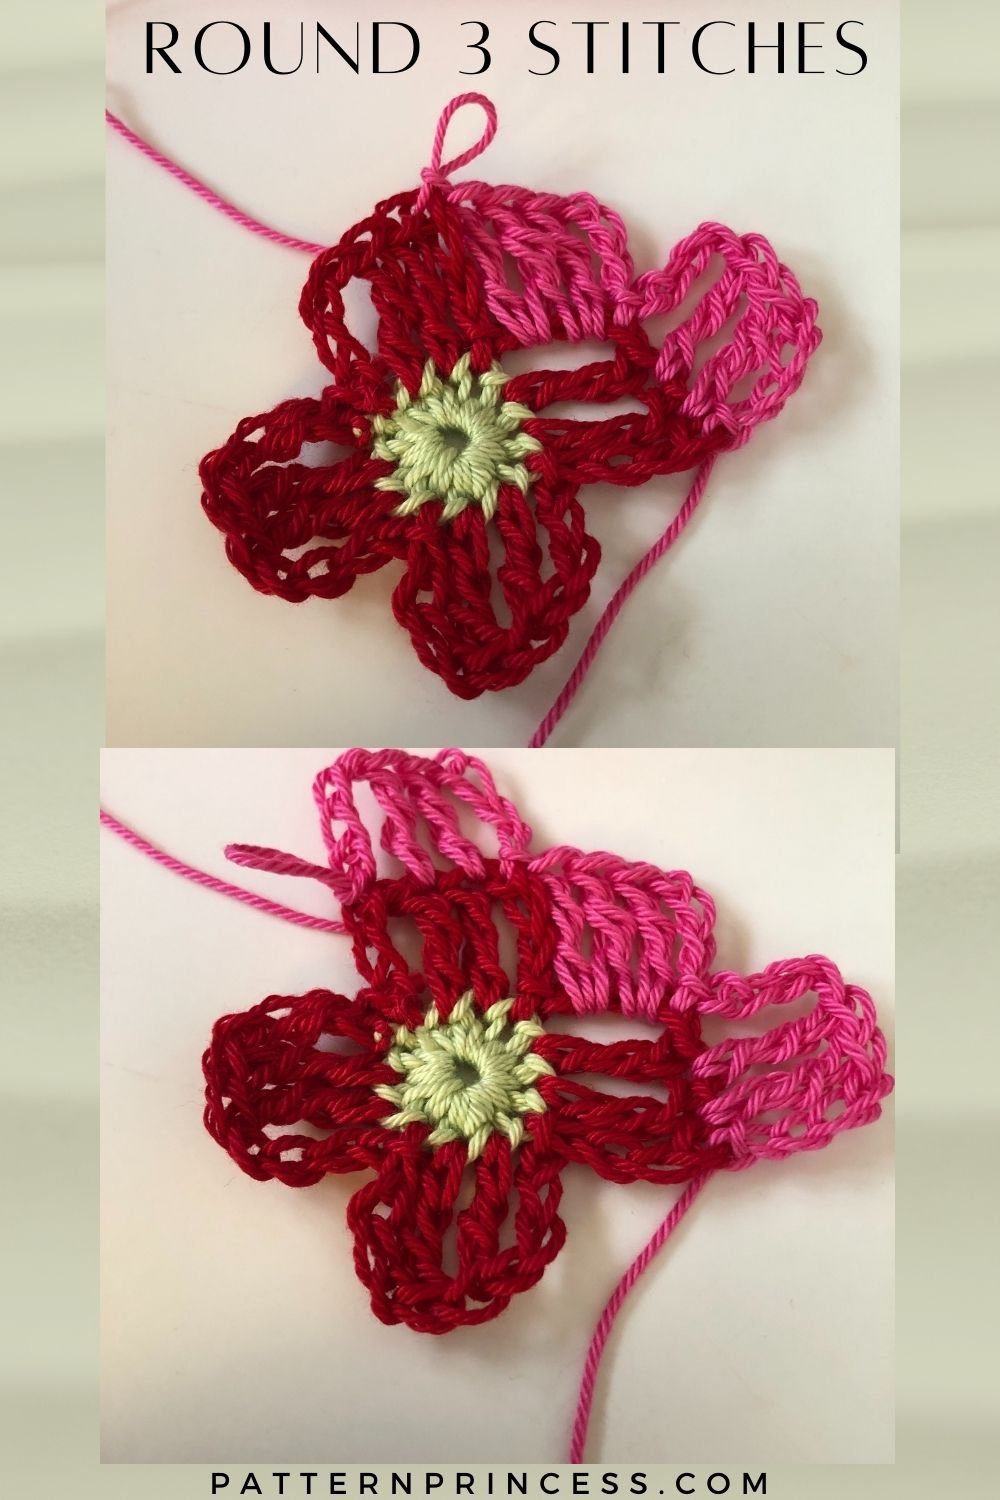 Crochet Cafe: An Amigurumi Book You Want In Your Library  Crochet books,  Crochet table runner pattern, Crochet flower patterns